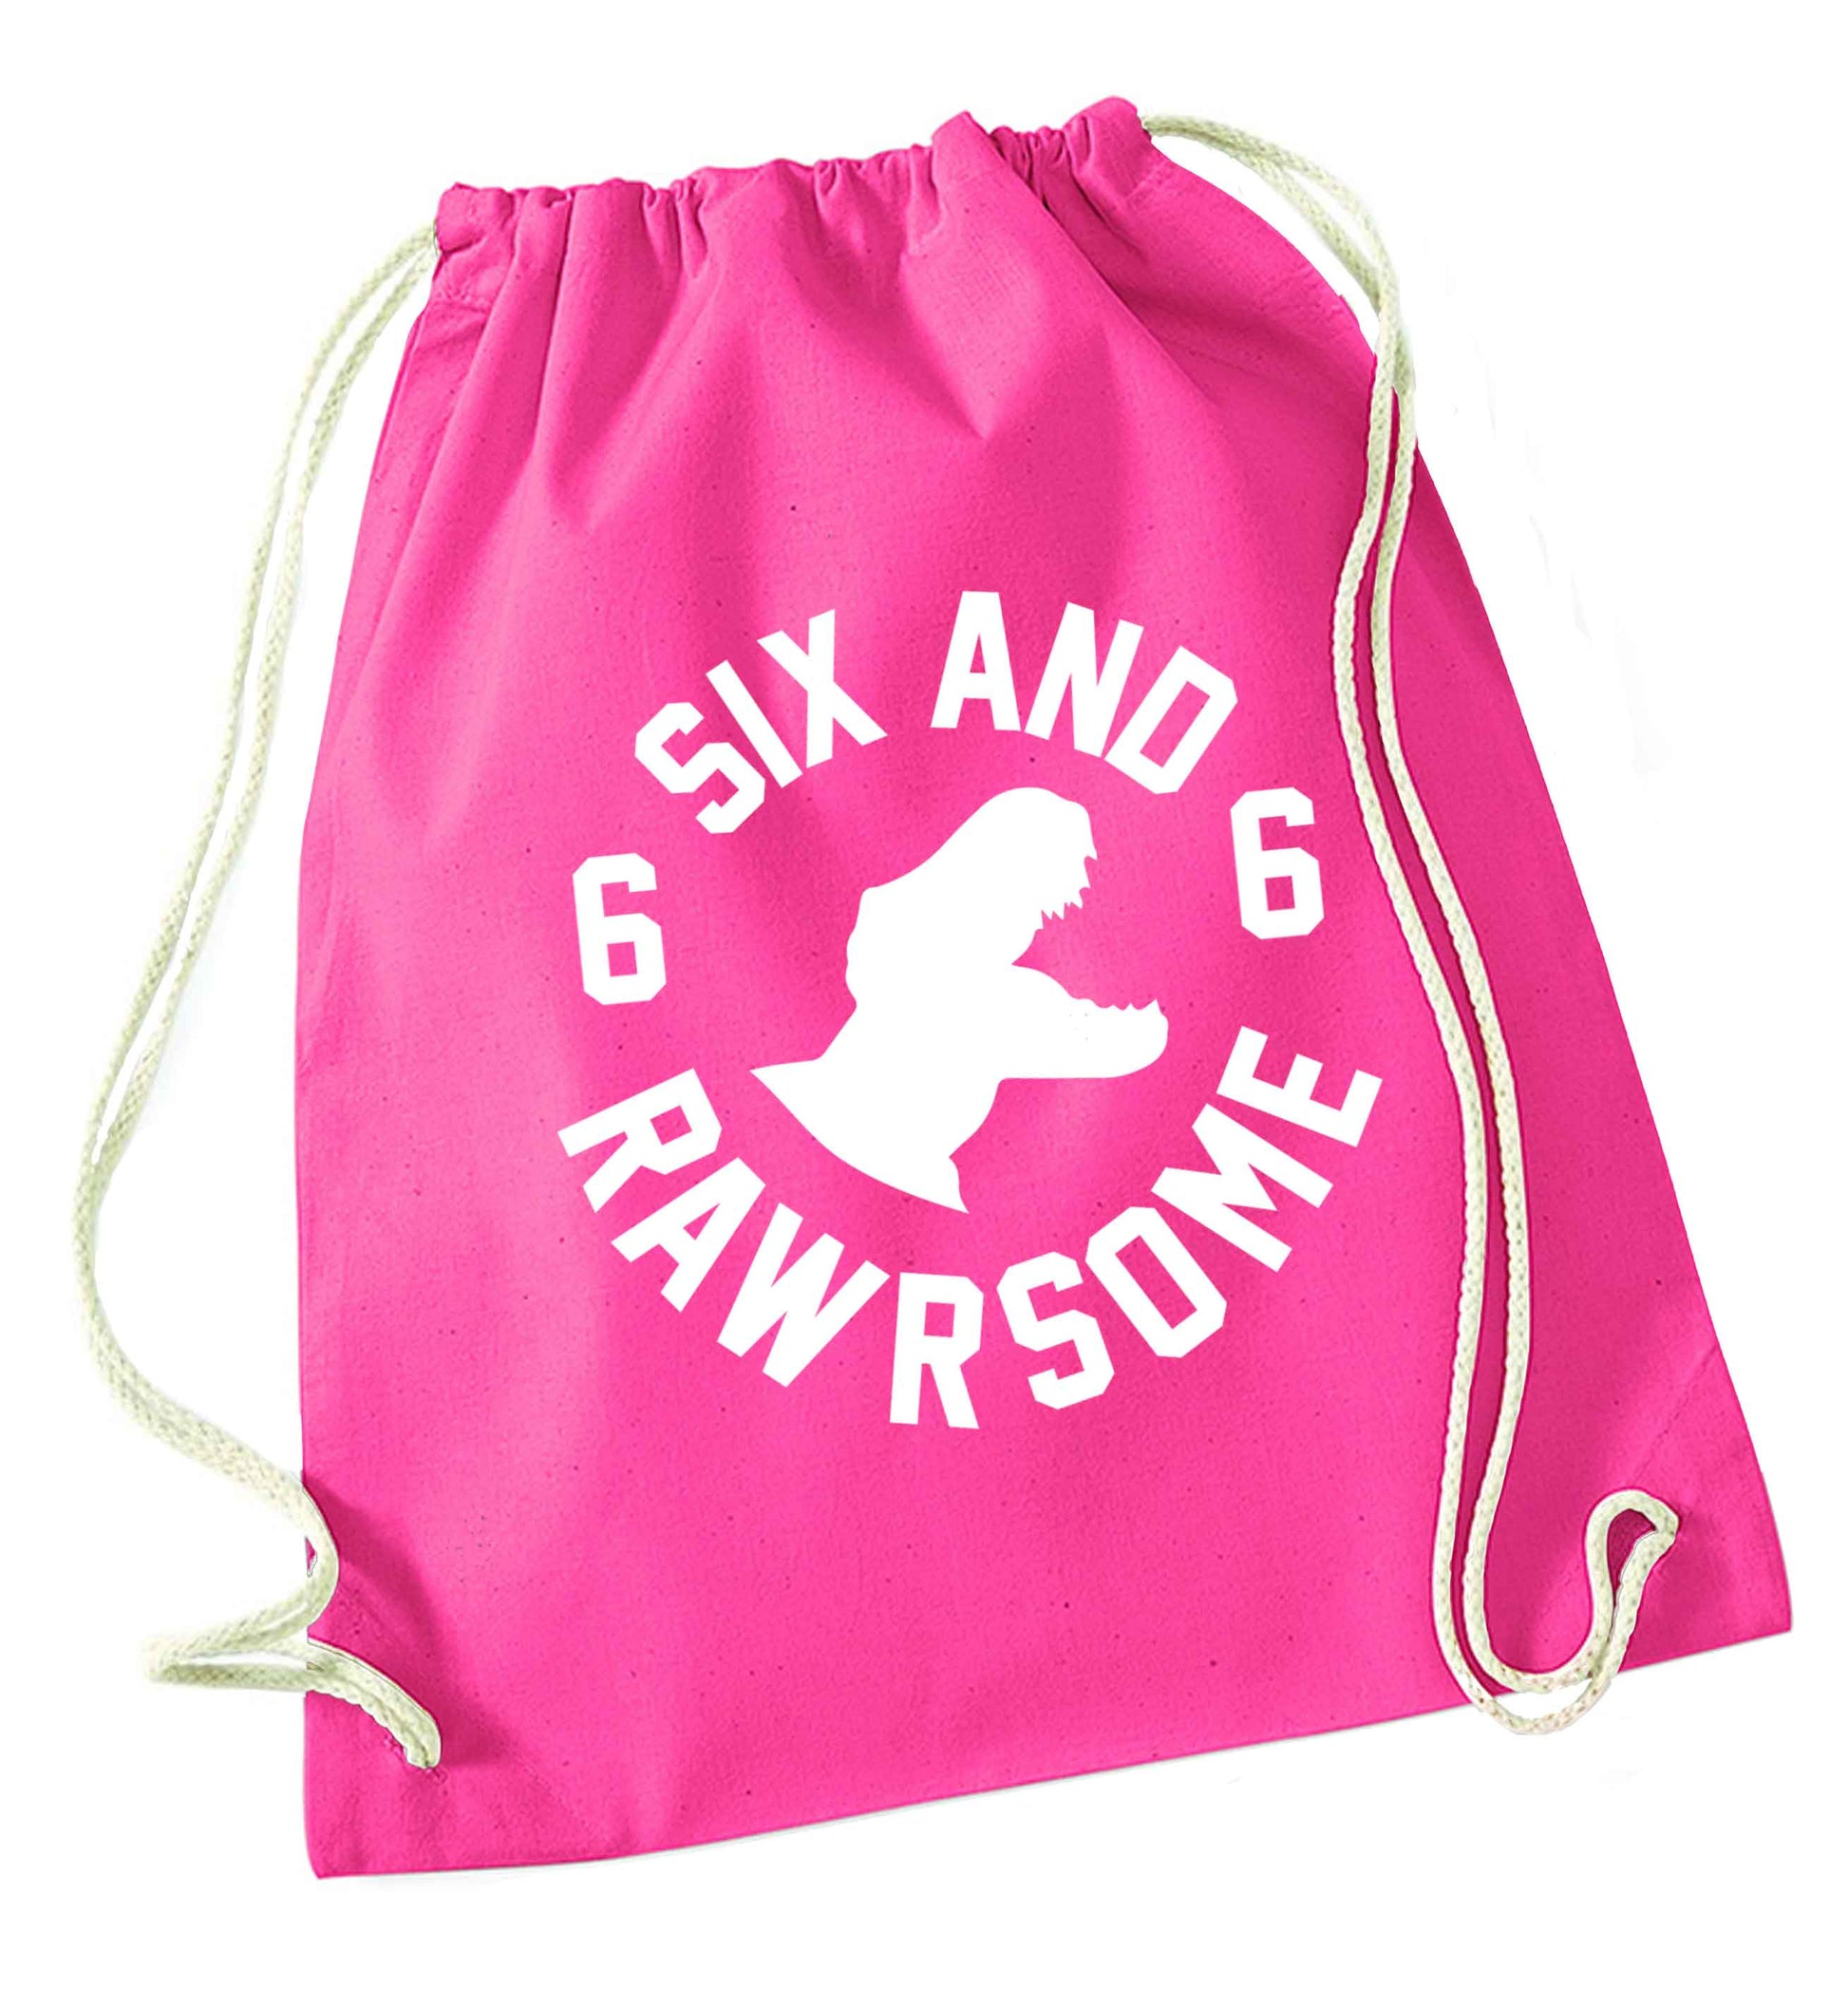 Six and rawrsome pink drawstring bag